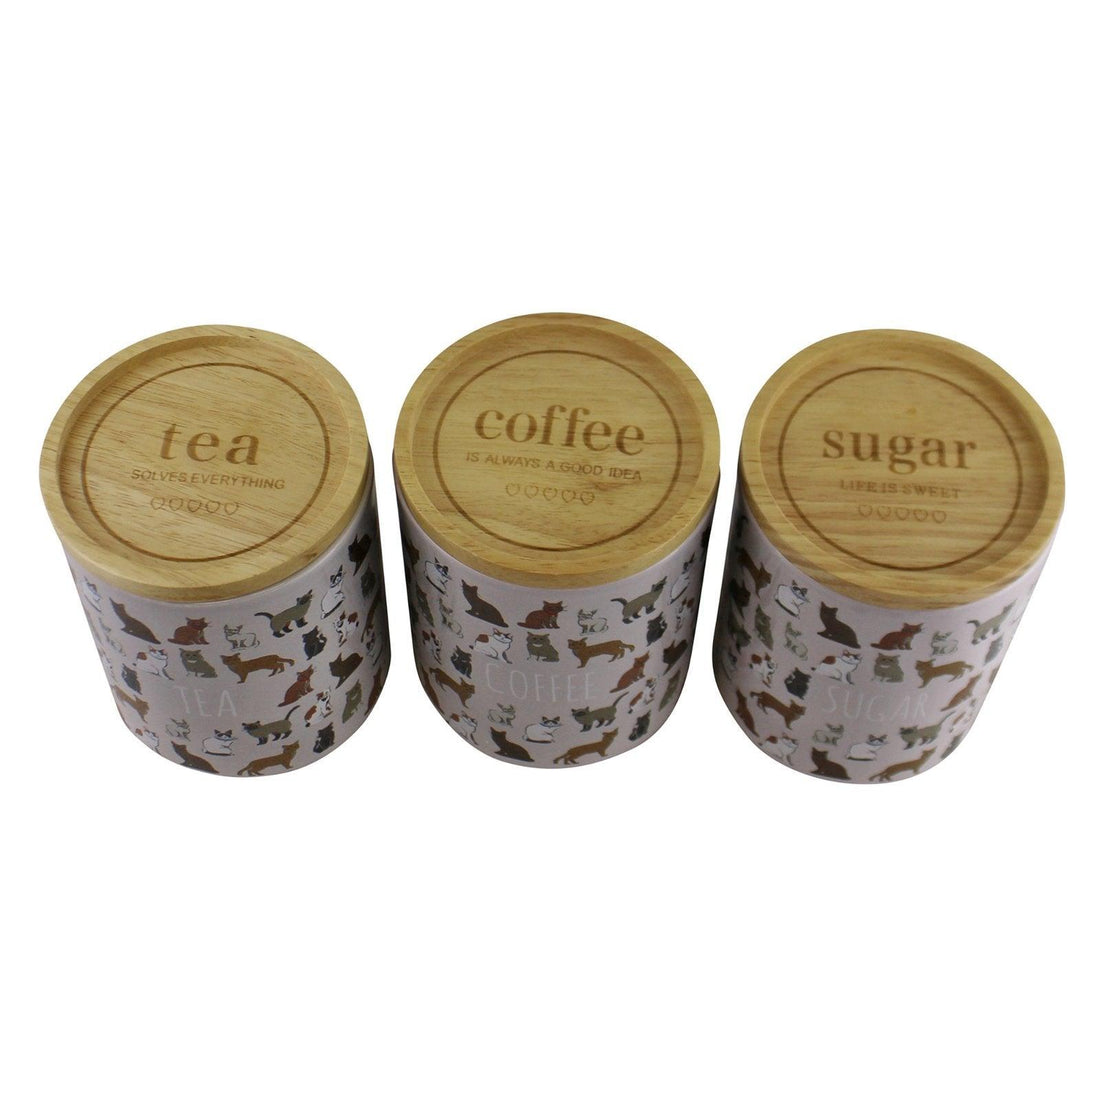 Ceramic Cat Design Tea,Coffee & Sugar Canisters - £59.99 - Kitchen Storage 